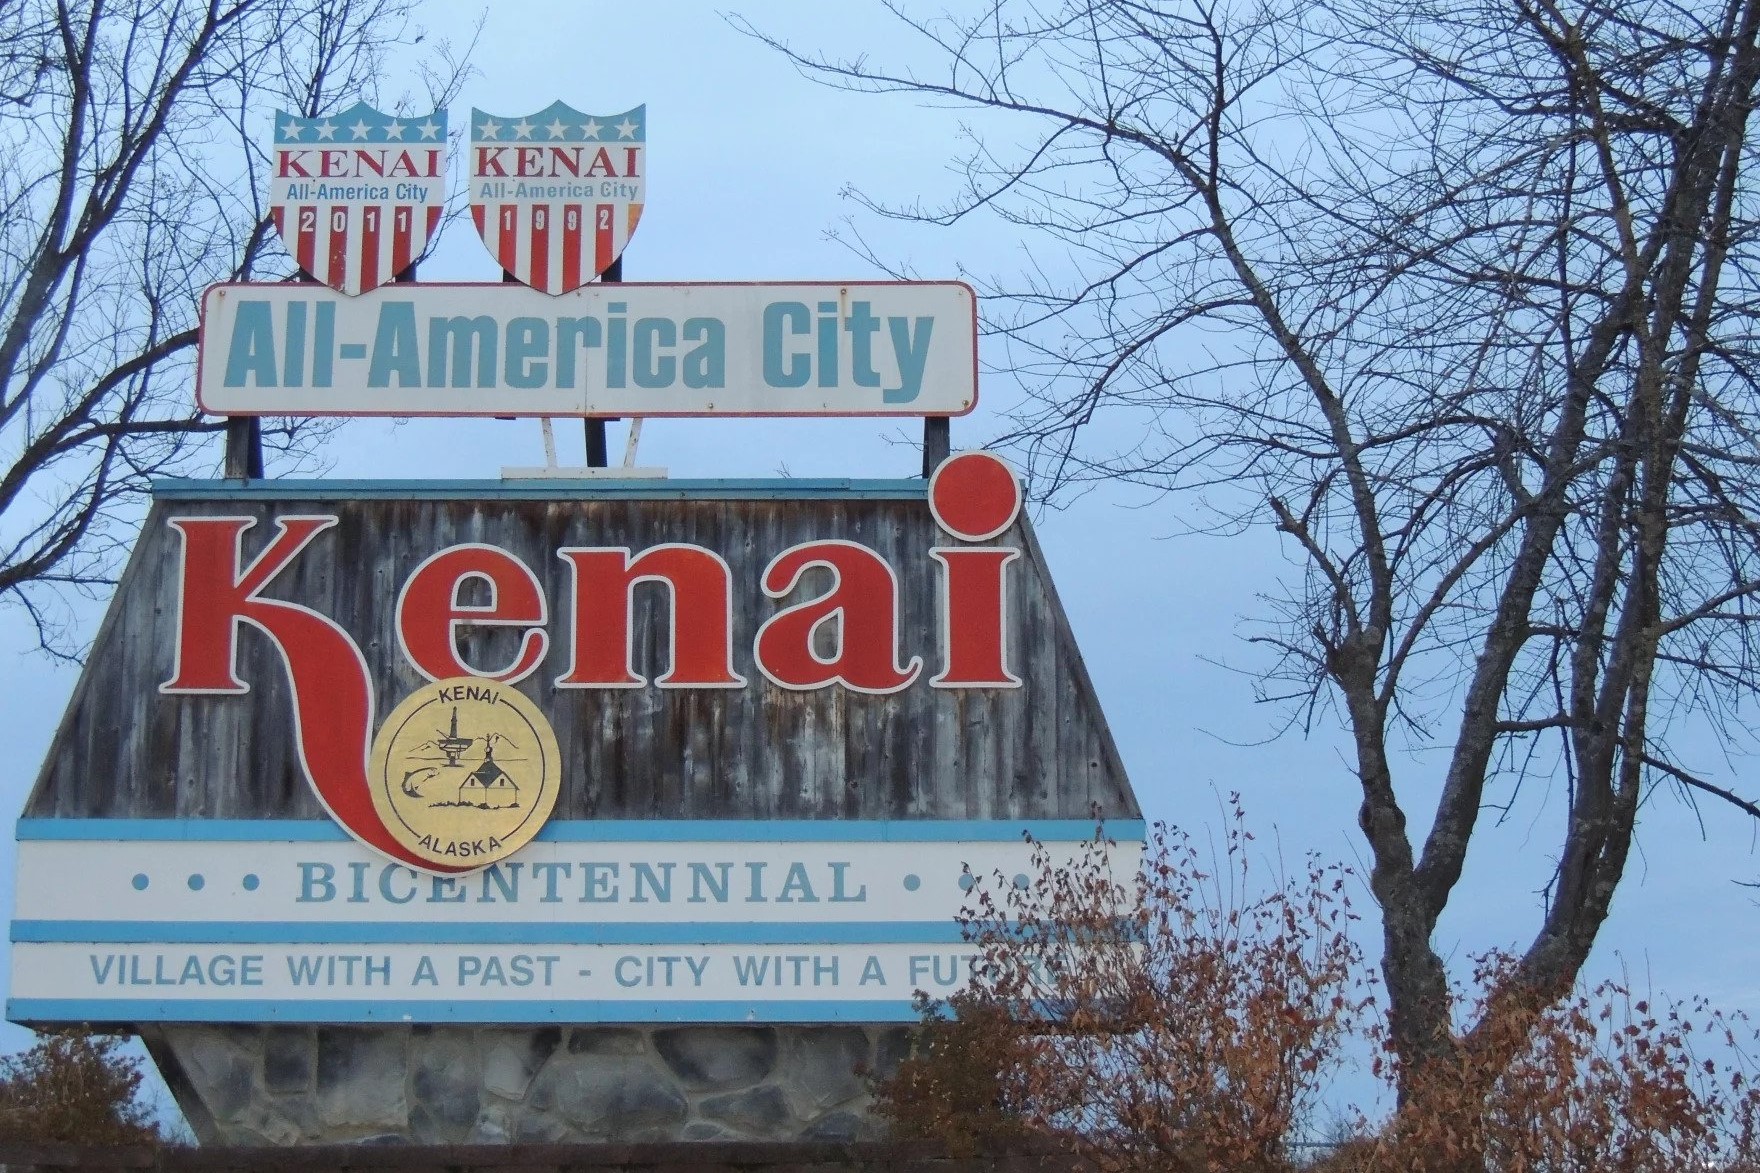 a sign says "All-American City Kenai"